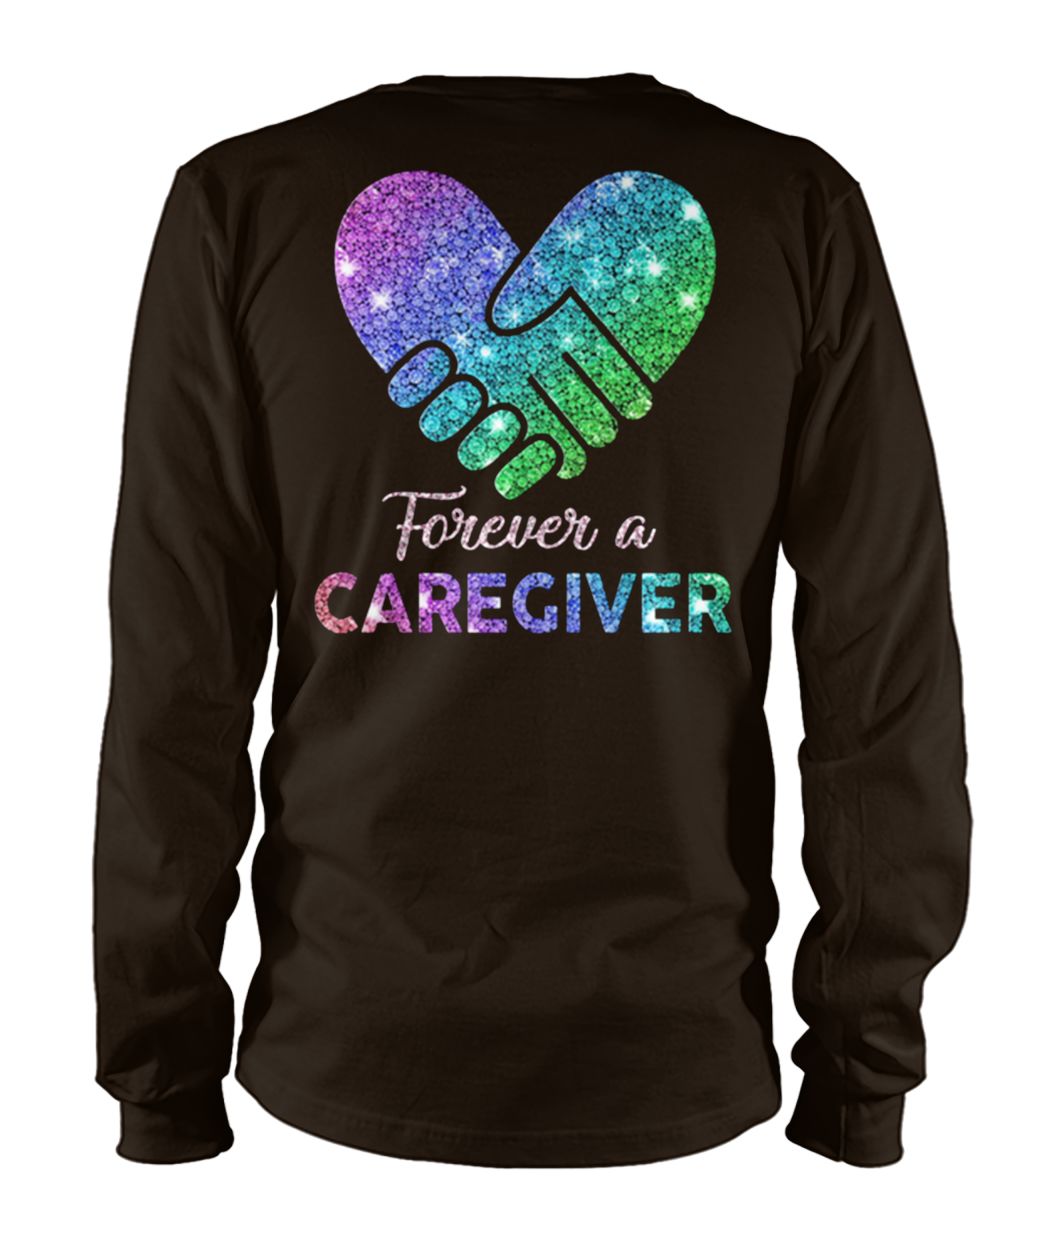 Forever a caregiver unisex long sleeve